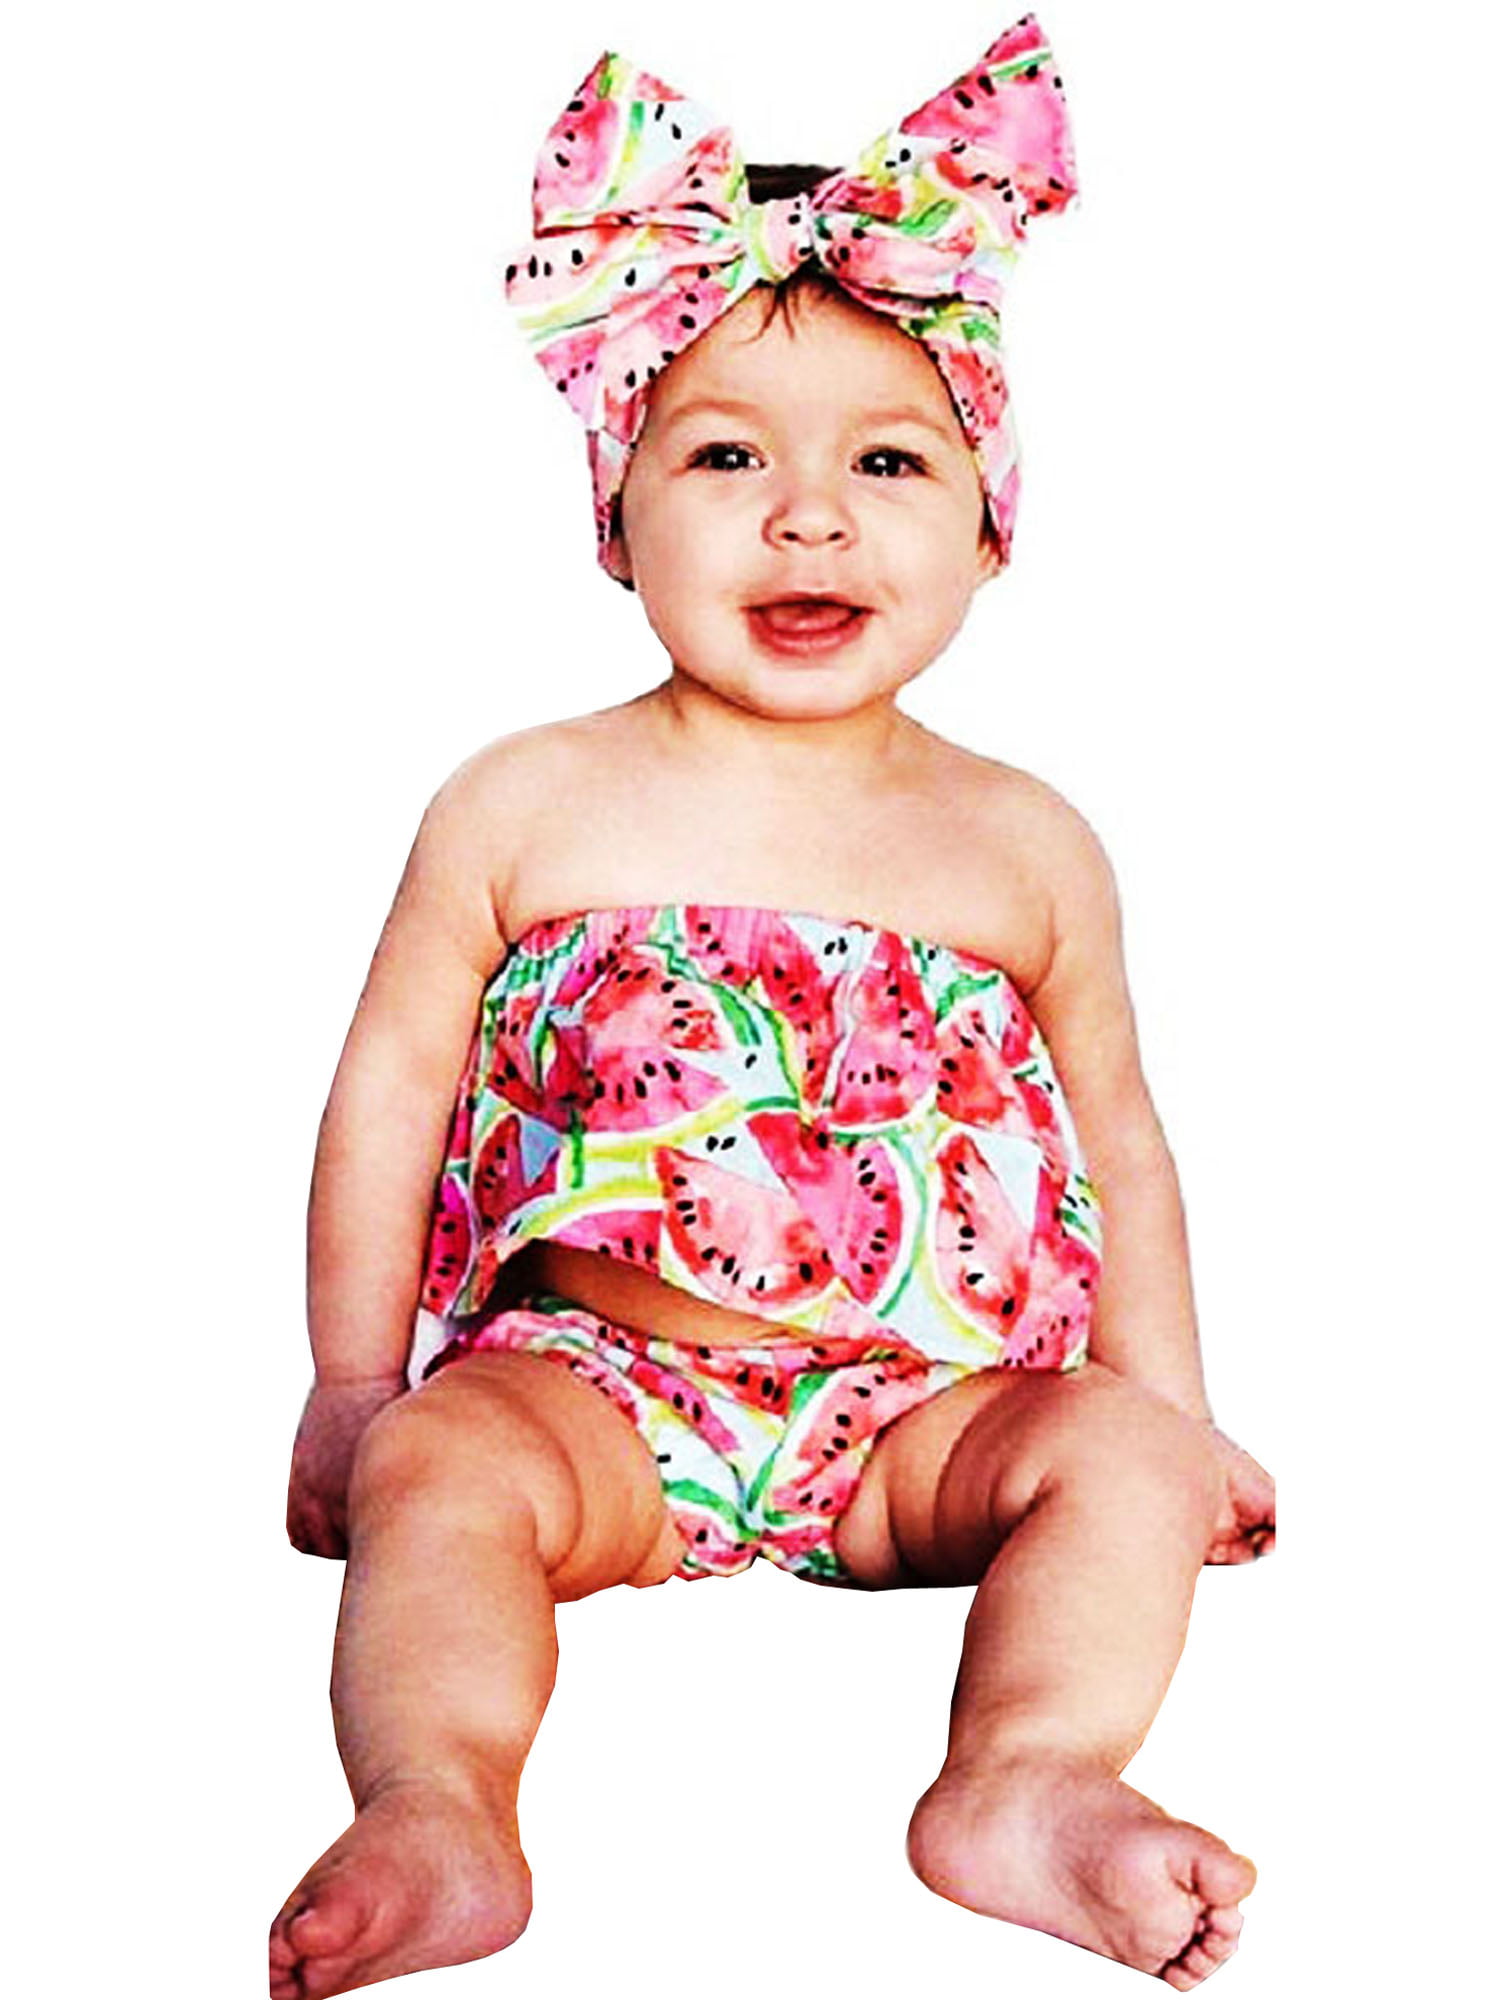 Dfenere 3D Watermelon Retro Newborn Baby Long Sleeve Bodysuit Romper Infant Summer Clothing